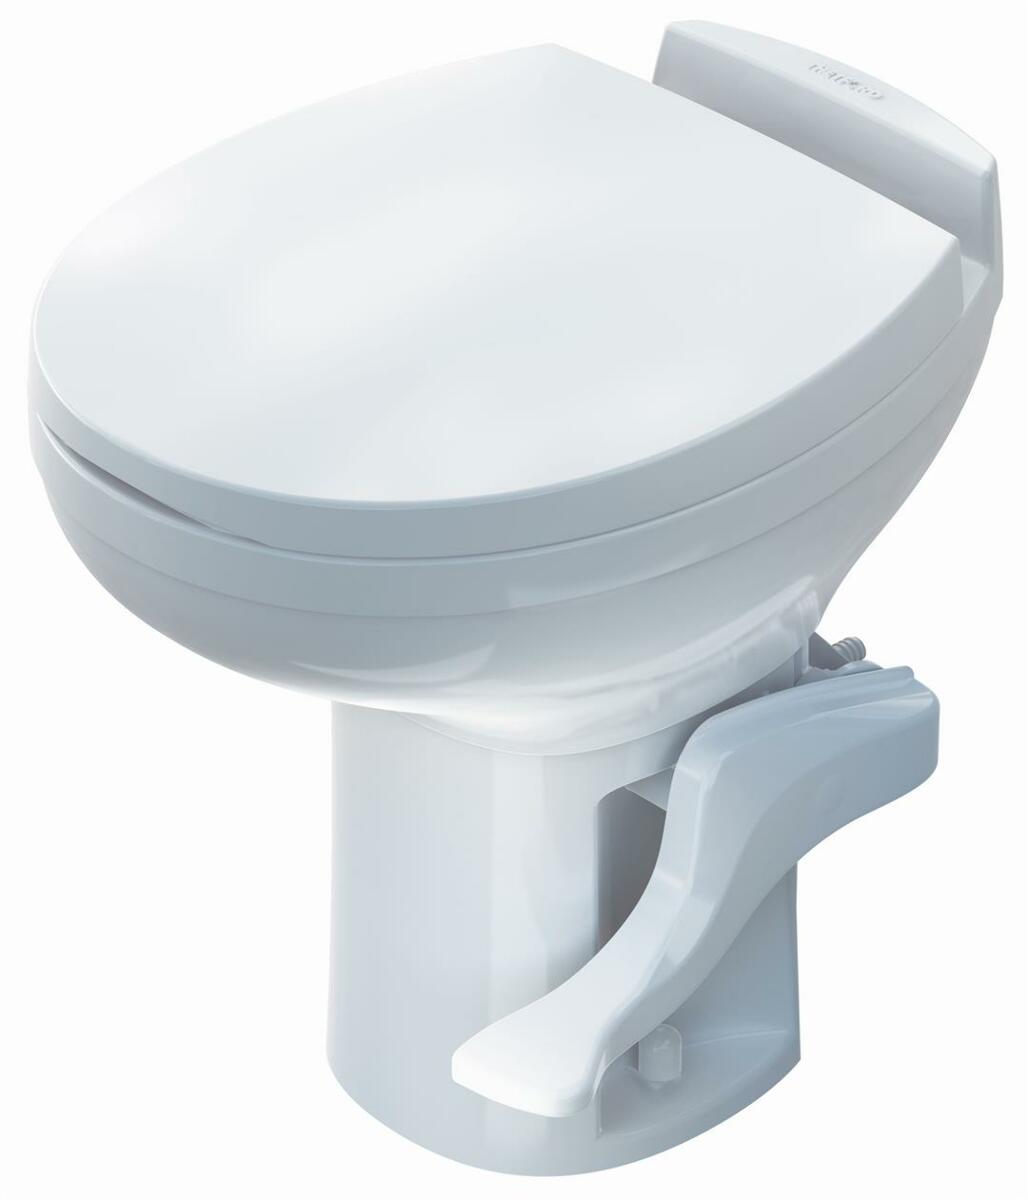 Thetford 42169 AQUAMAGIC RESIDENCE hi profile toilet - white